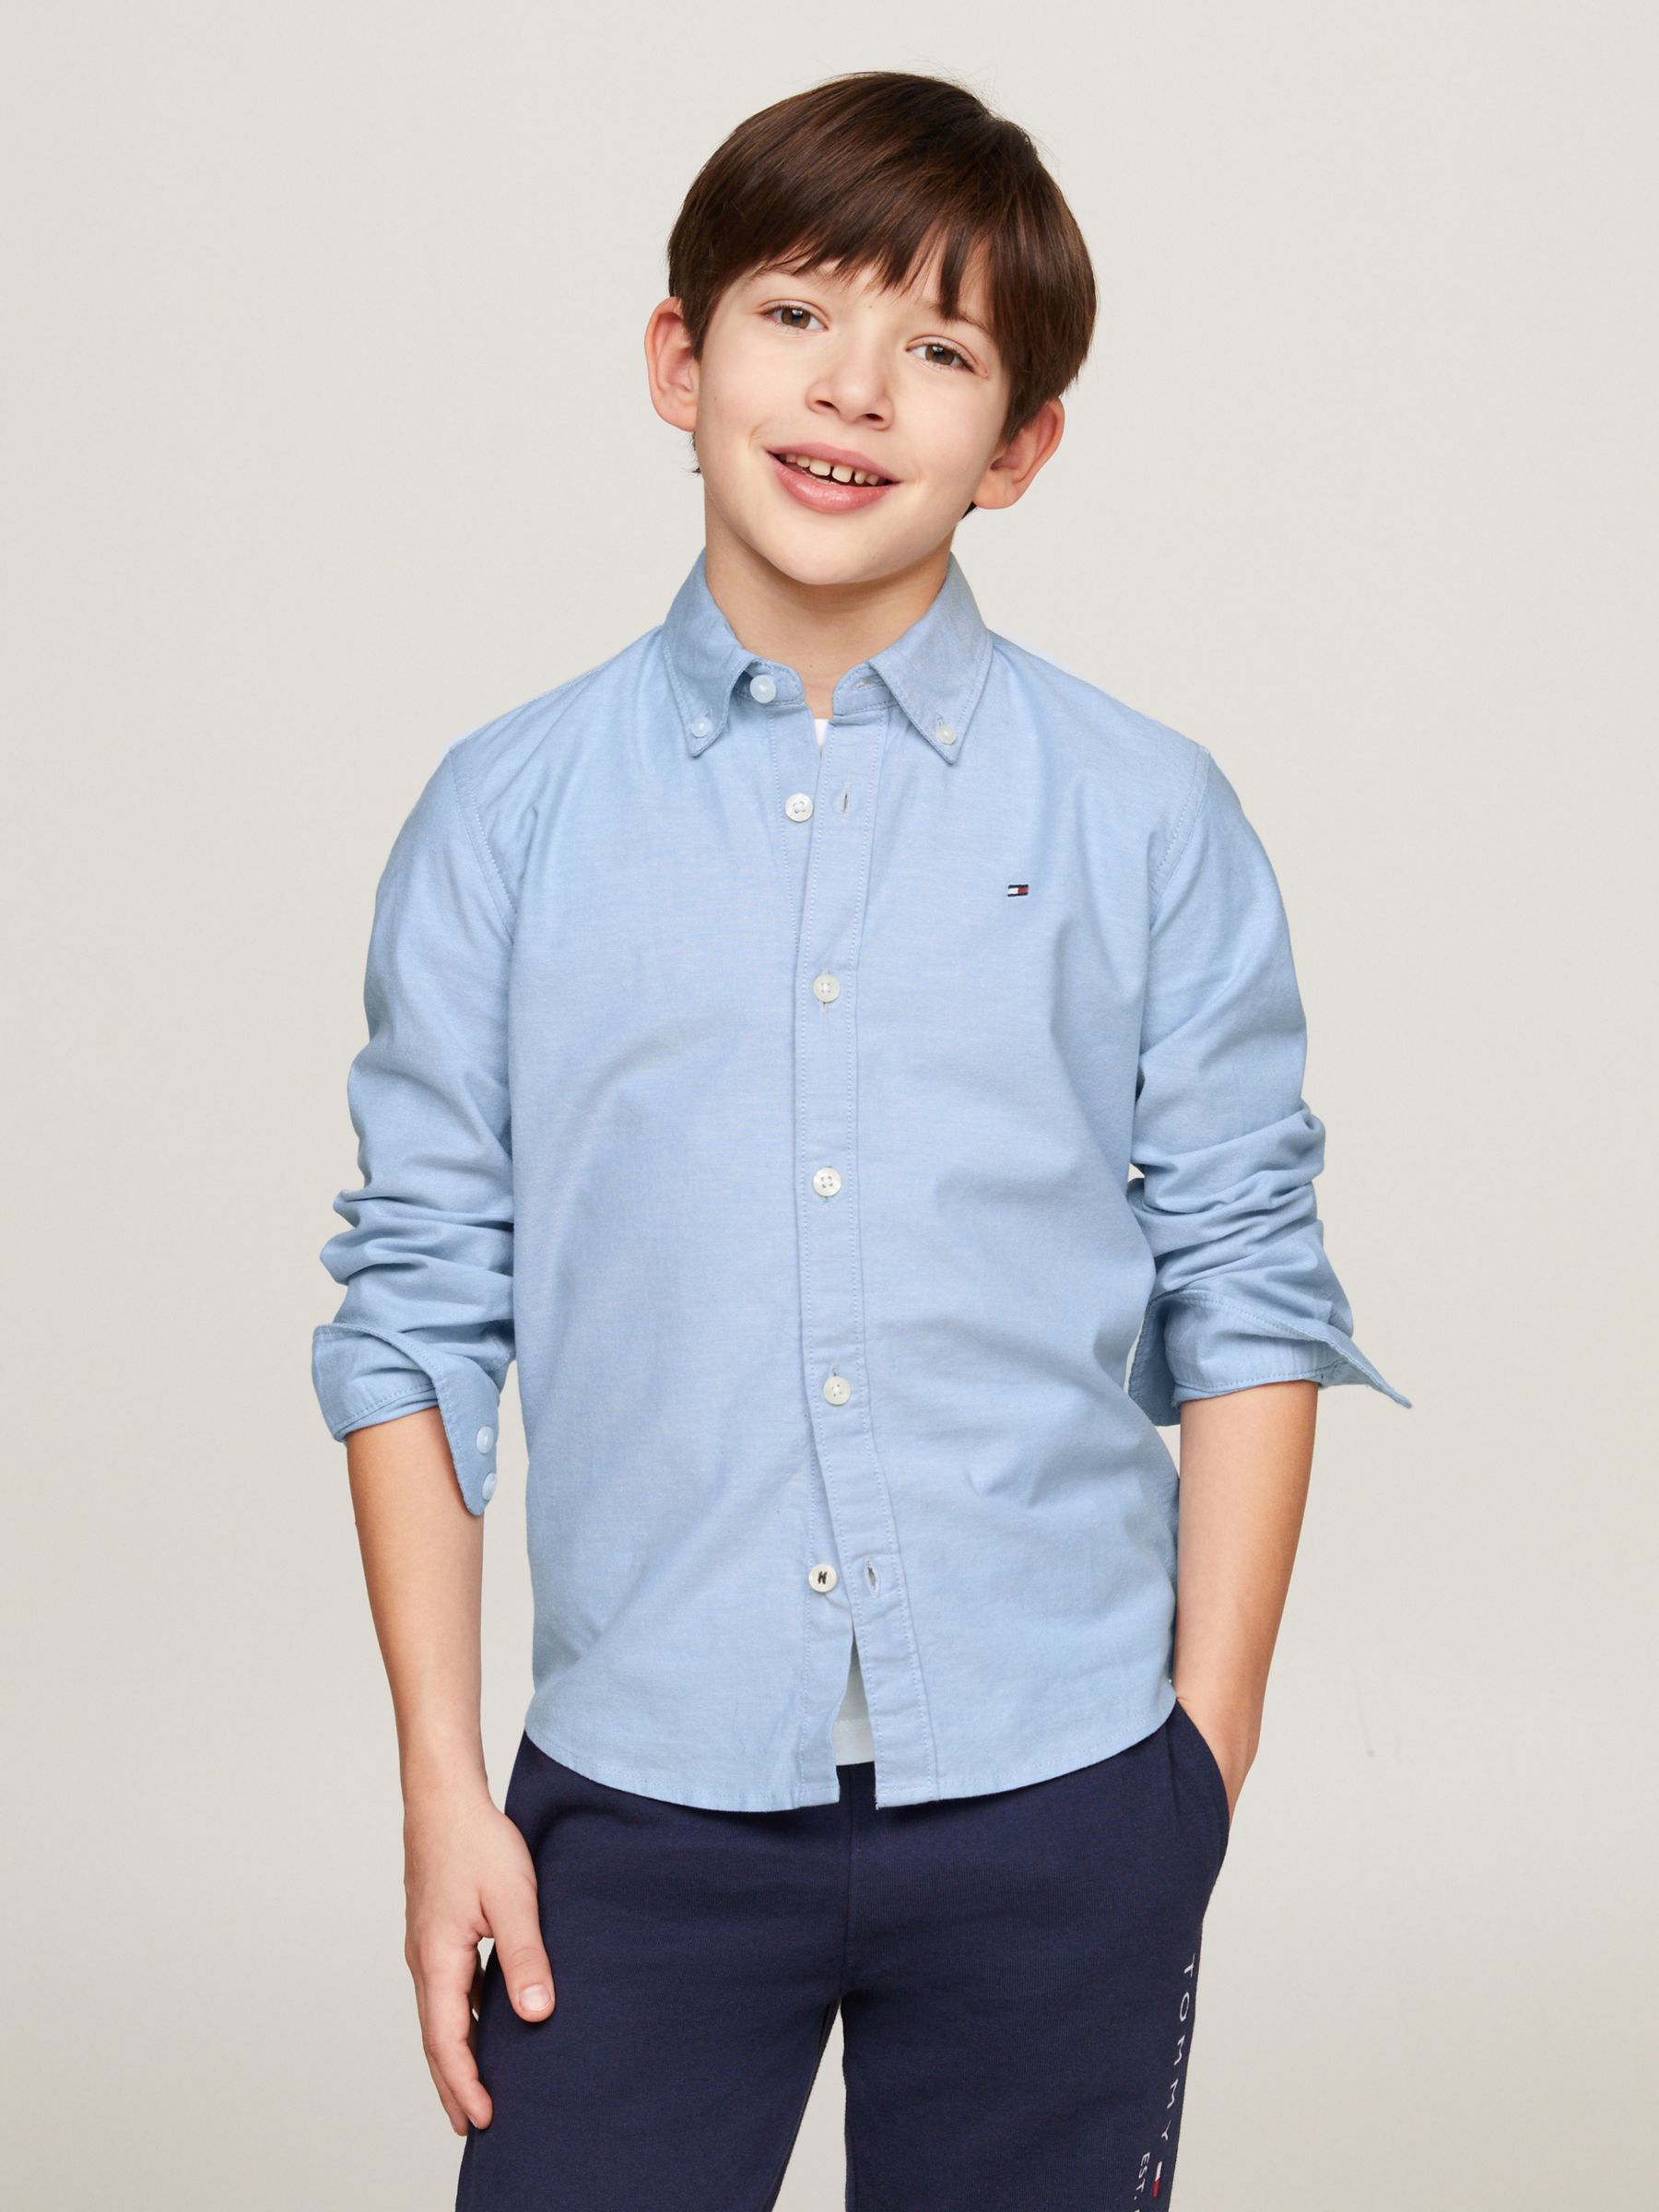 Tommy Hilfiger Kids' Organic Cotton Blend Stretch Oxford Shirt, Calm Blue, 3 years